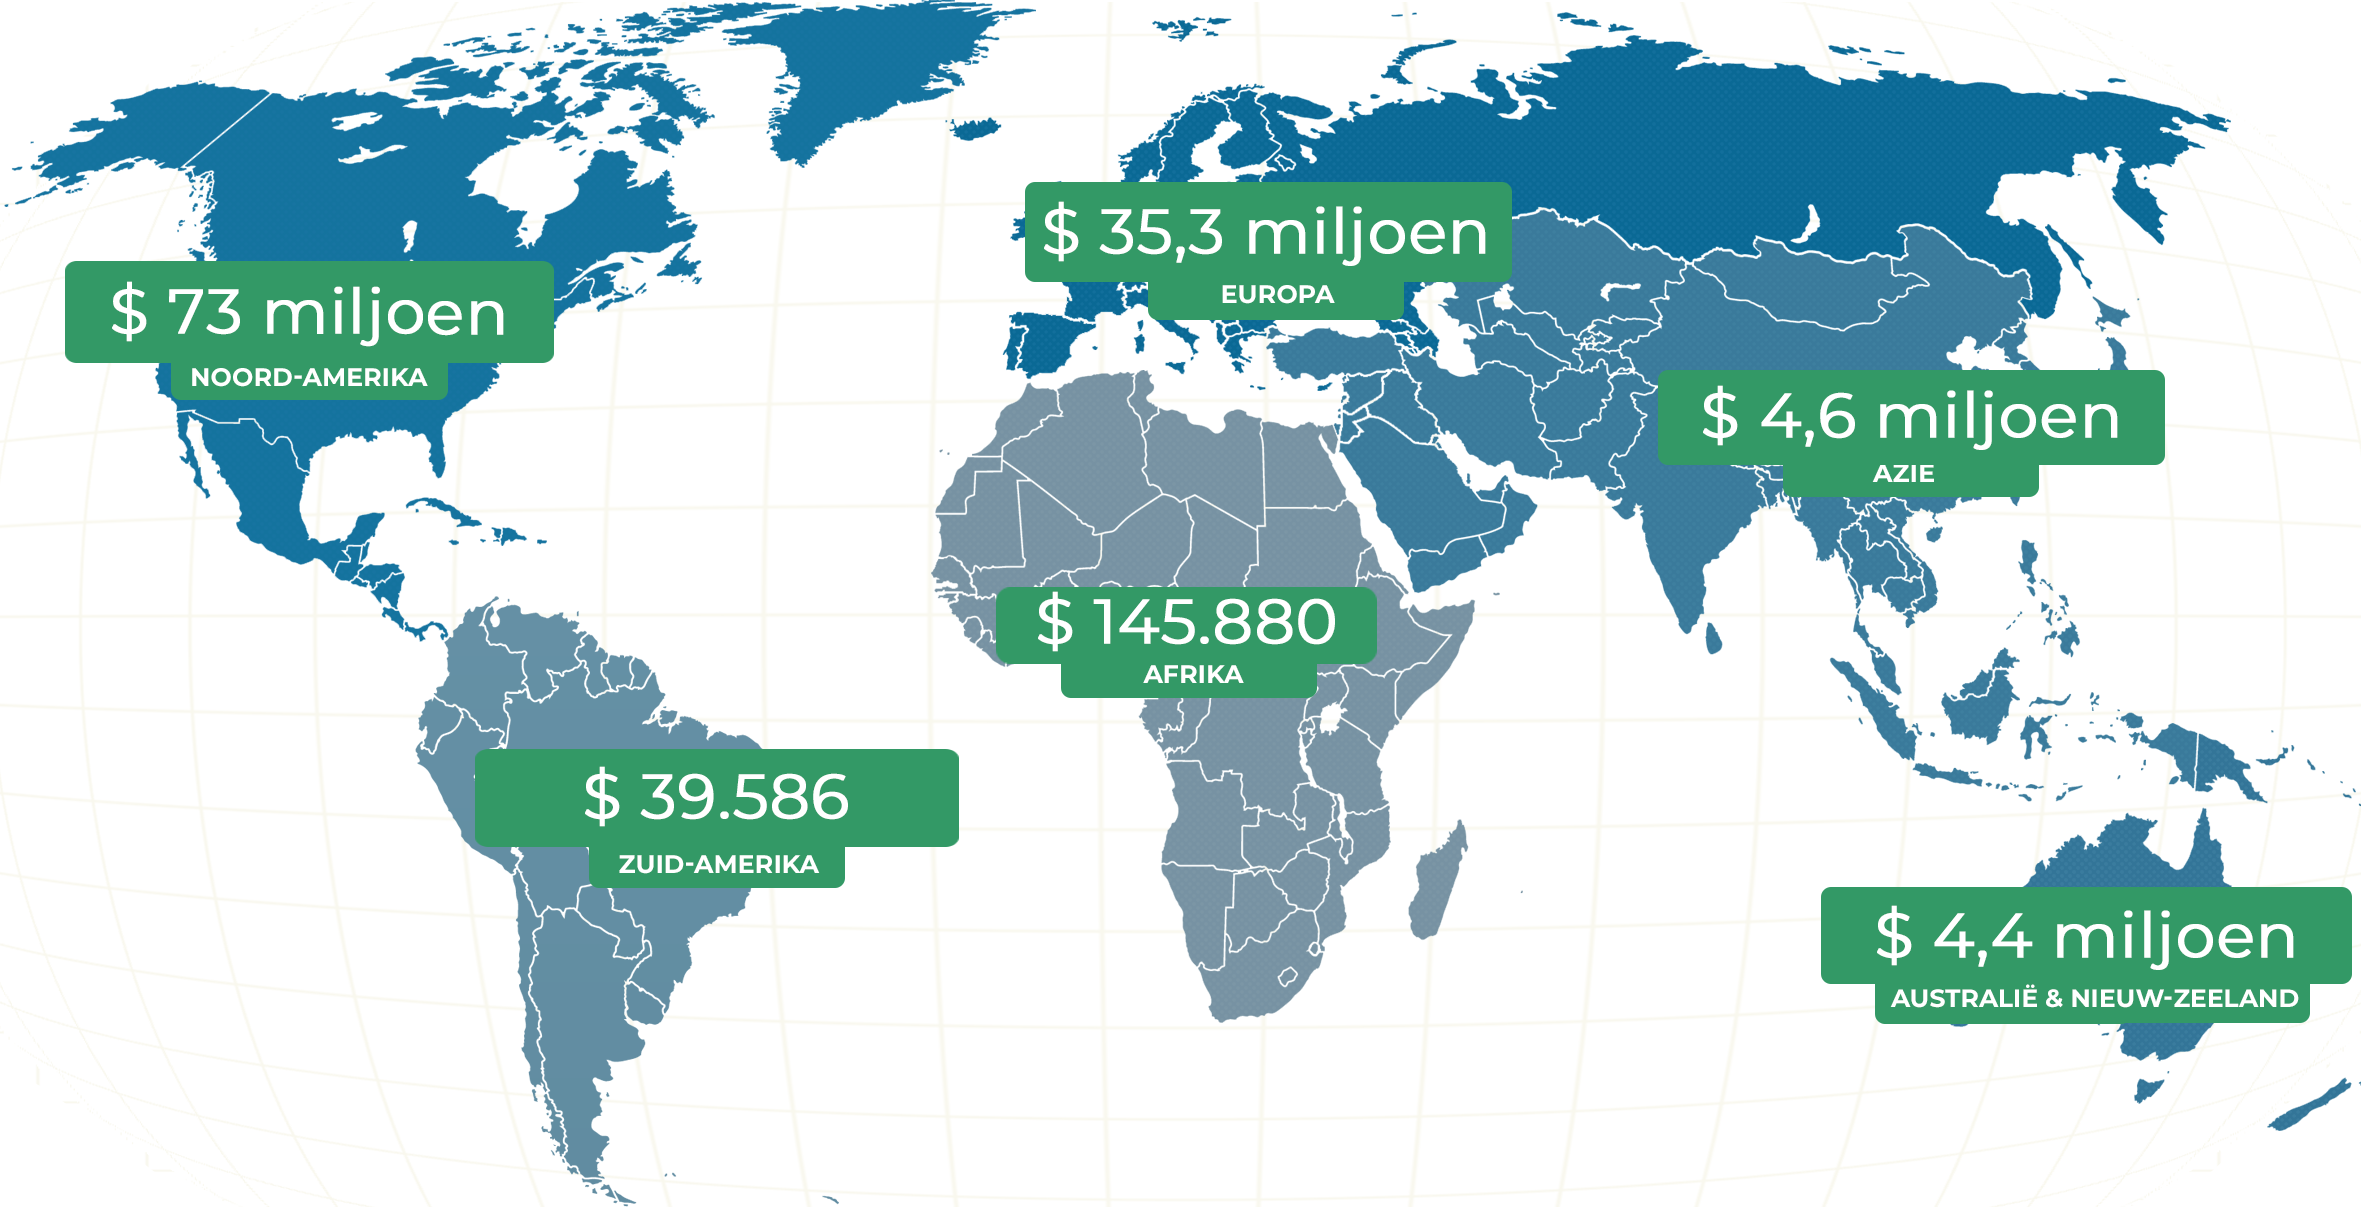 Totaal aantal donaties per continent